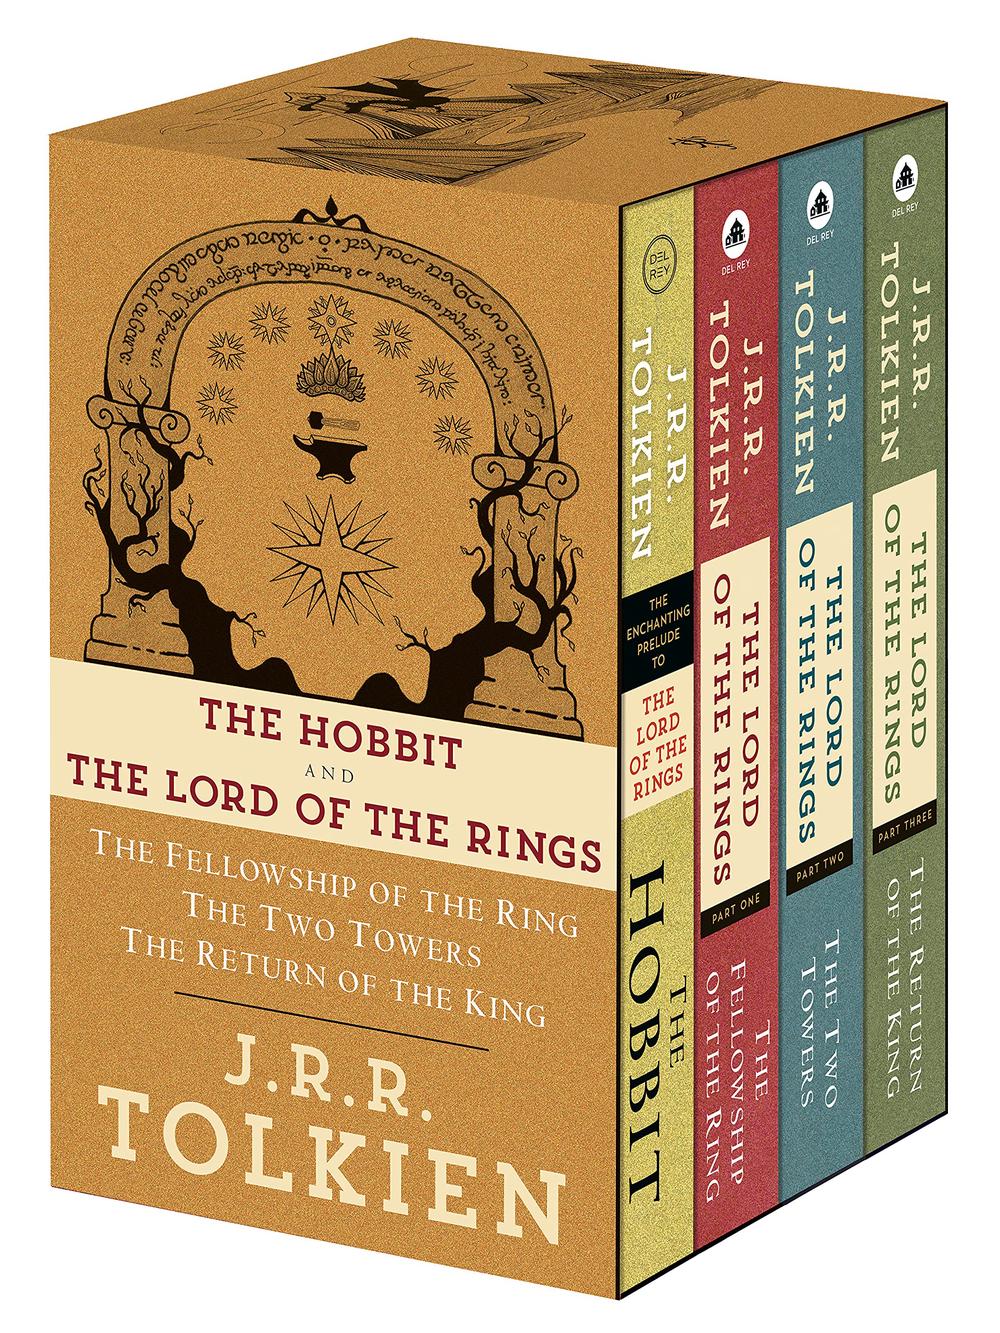 Realms of Tolkien by J.R.R. Tolkien